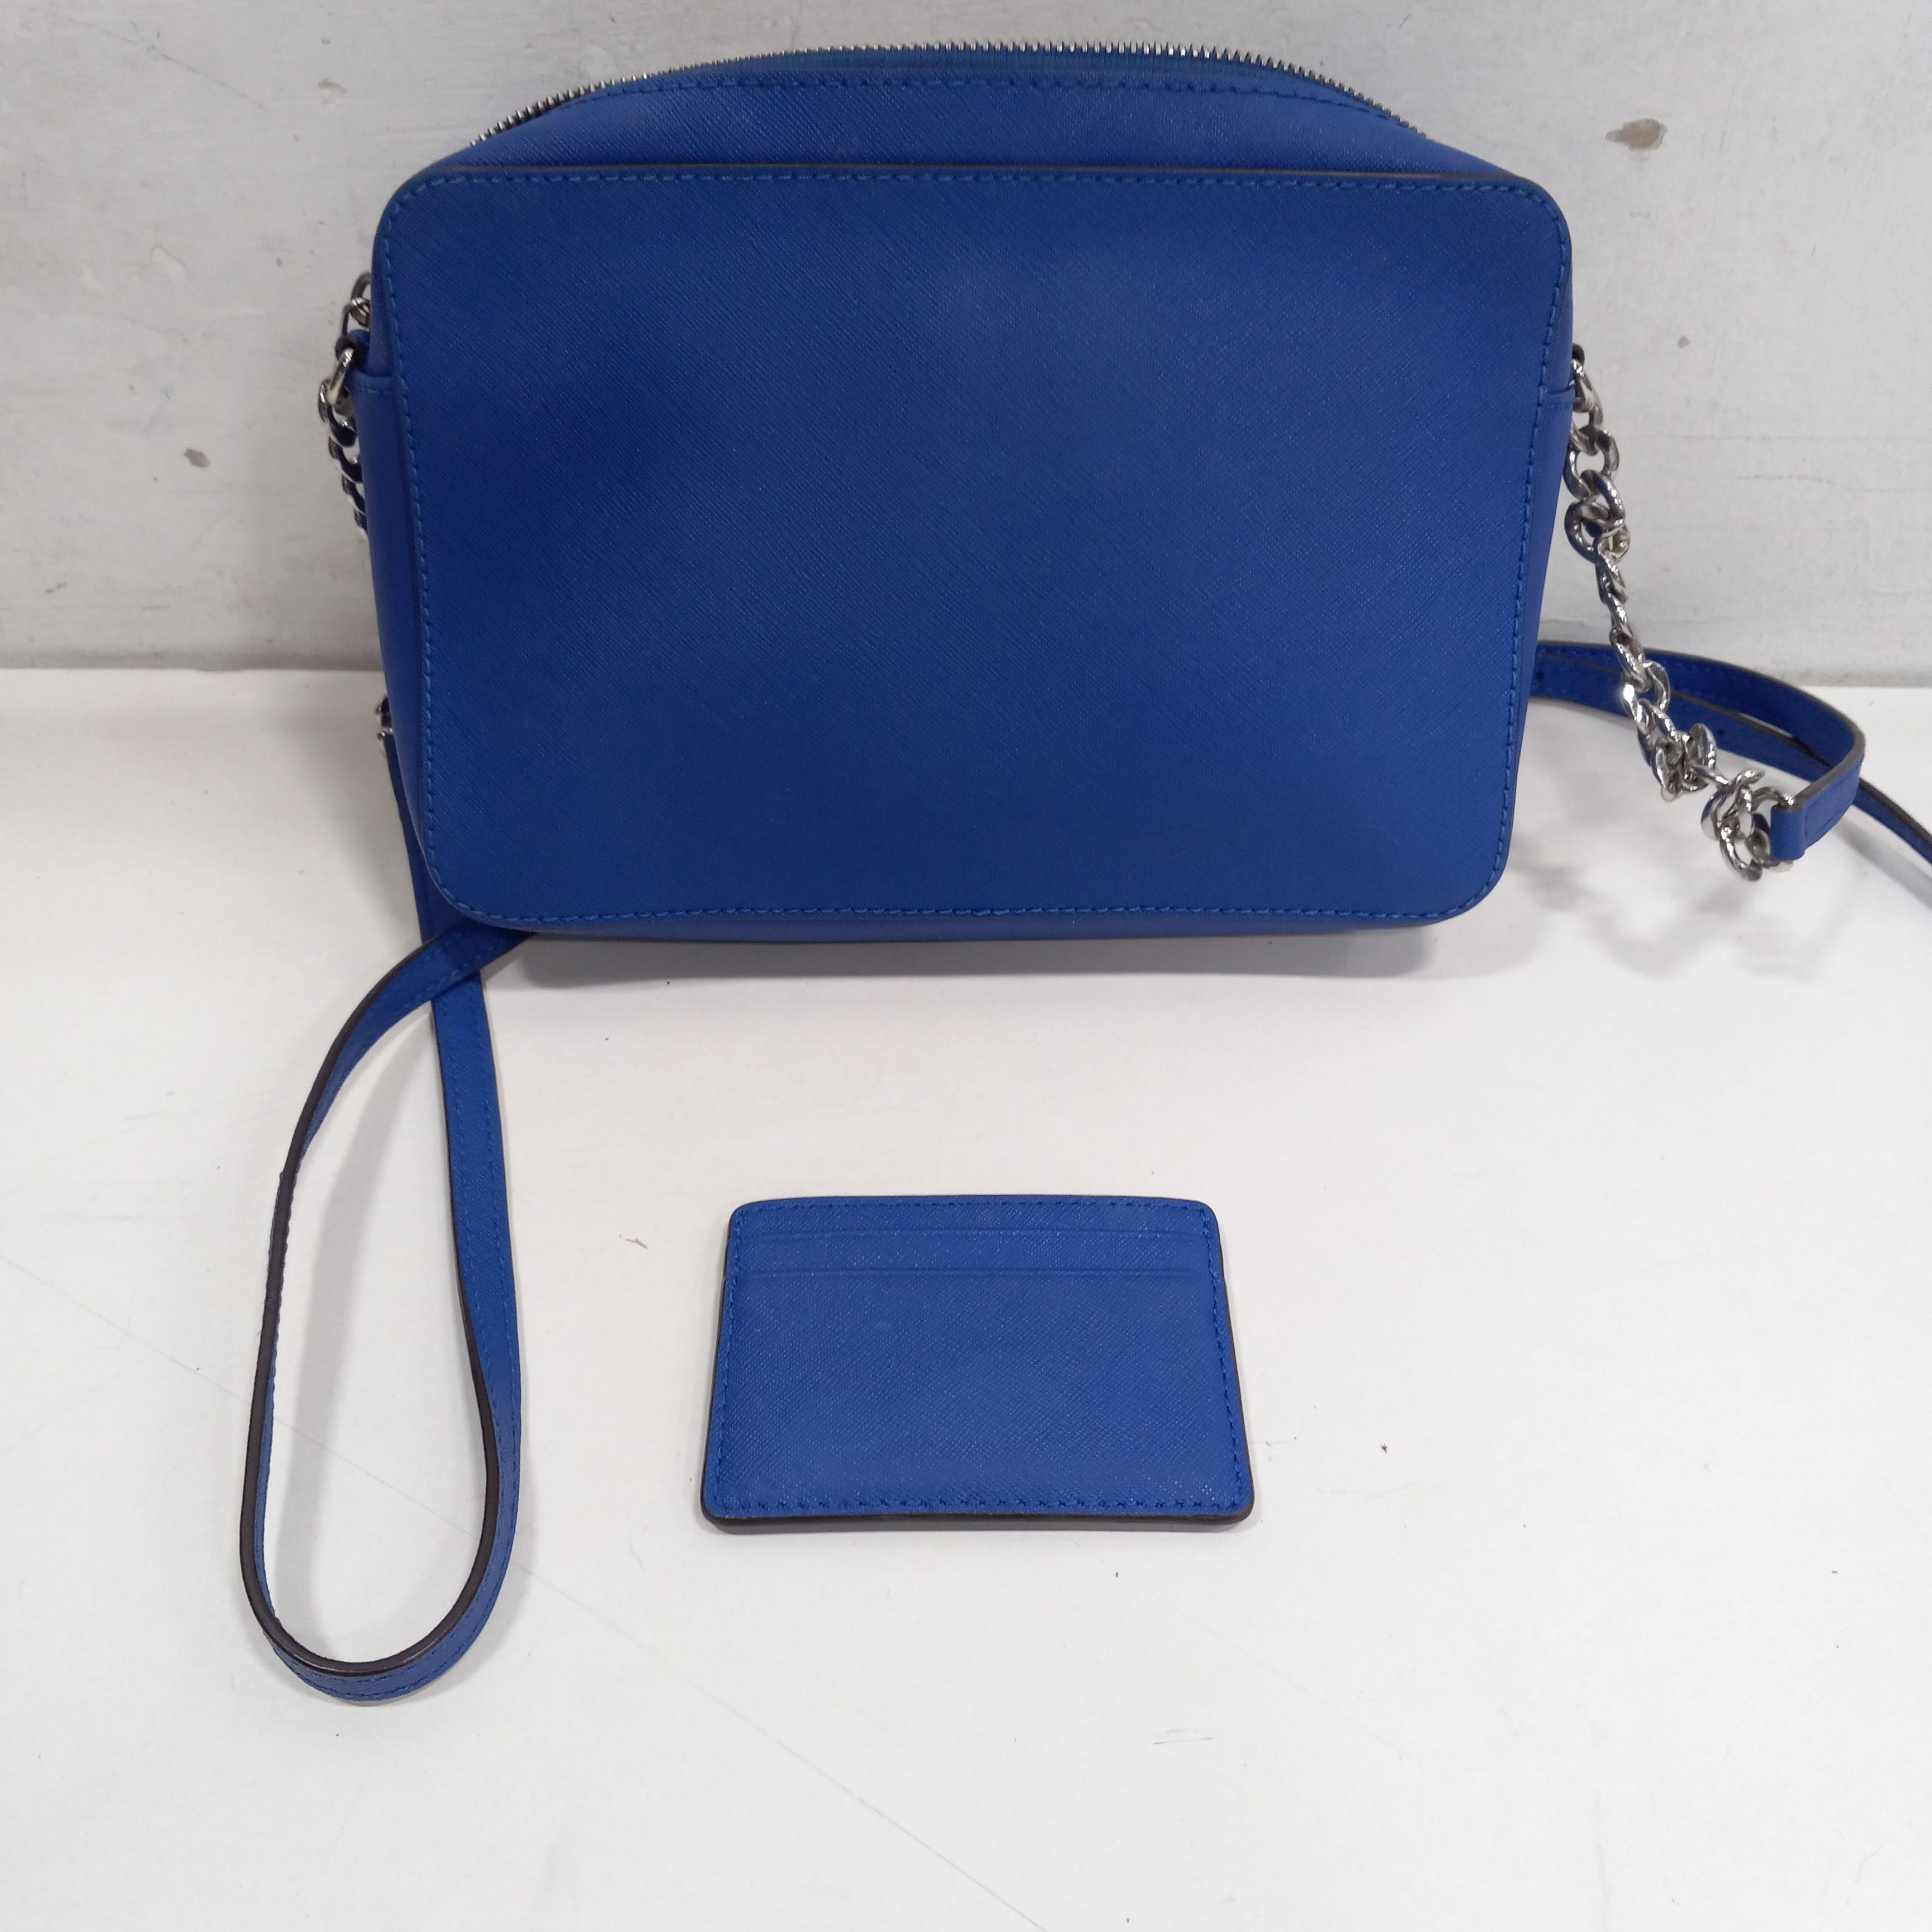 Michael Kors Women's Blue Backpacks | ShopStyle